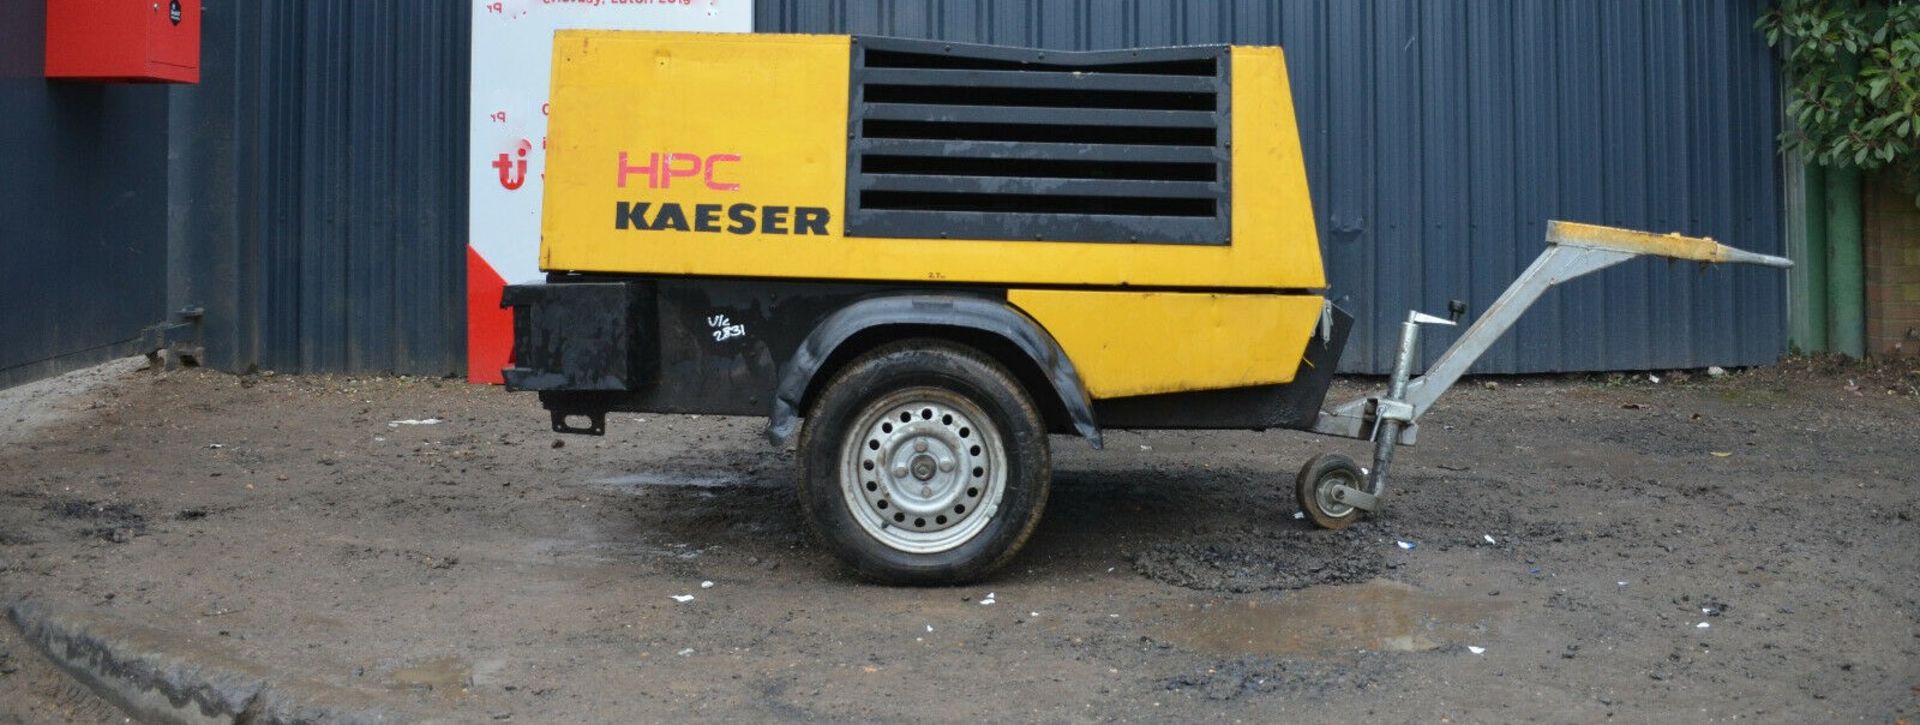 Kaeser m43 compressor 2011